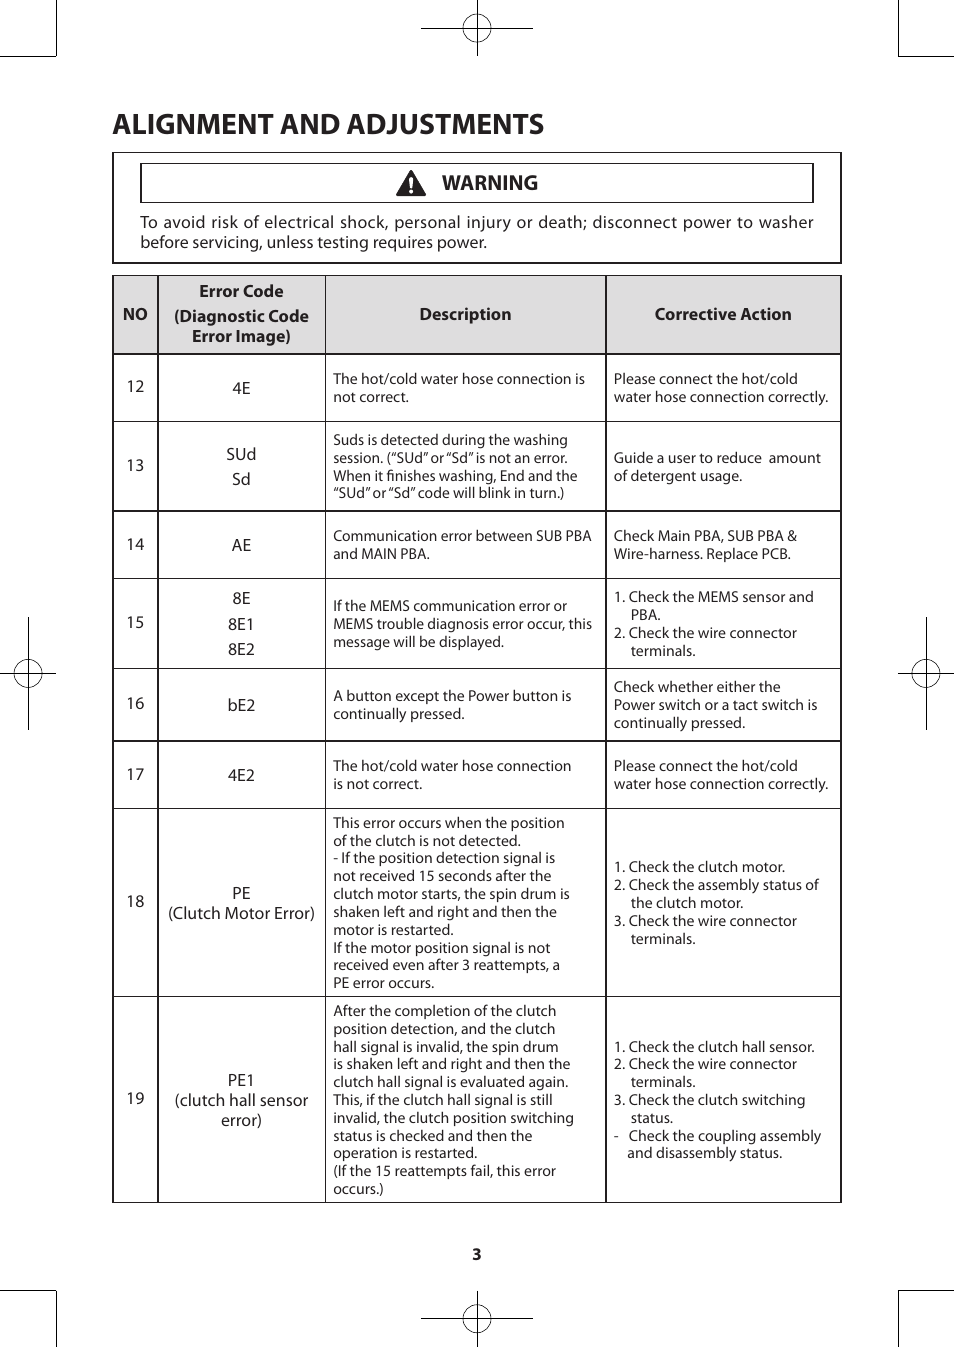 Alignment and adjustments, Warning | Samsung WA48H7400AW-A2 User Manual